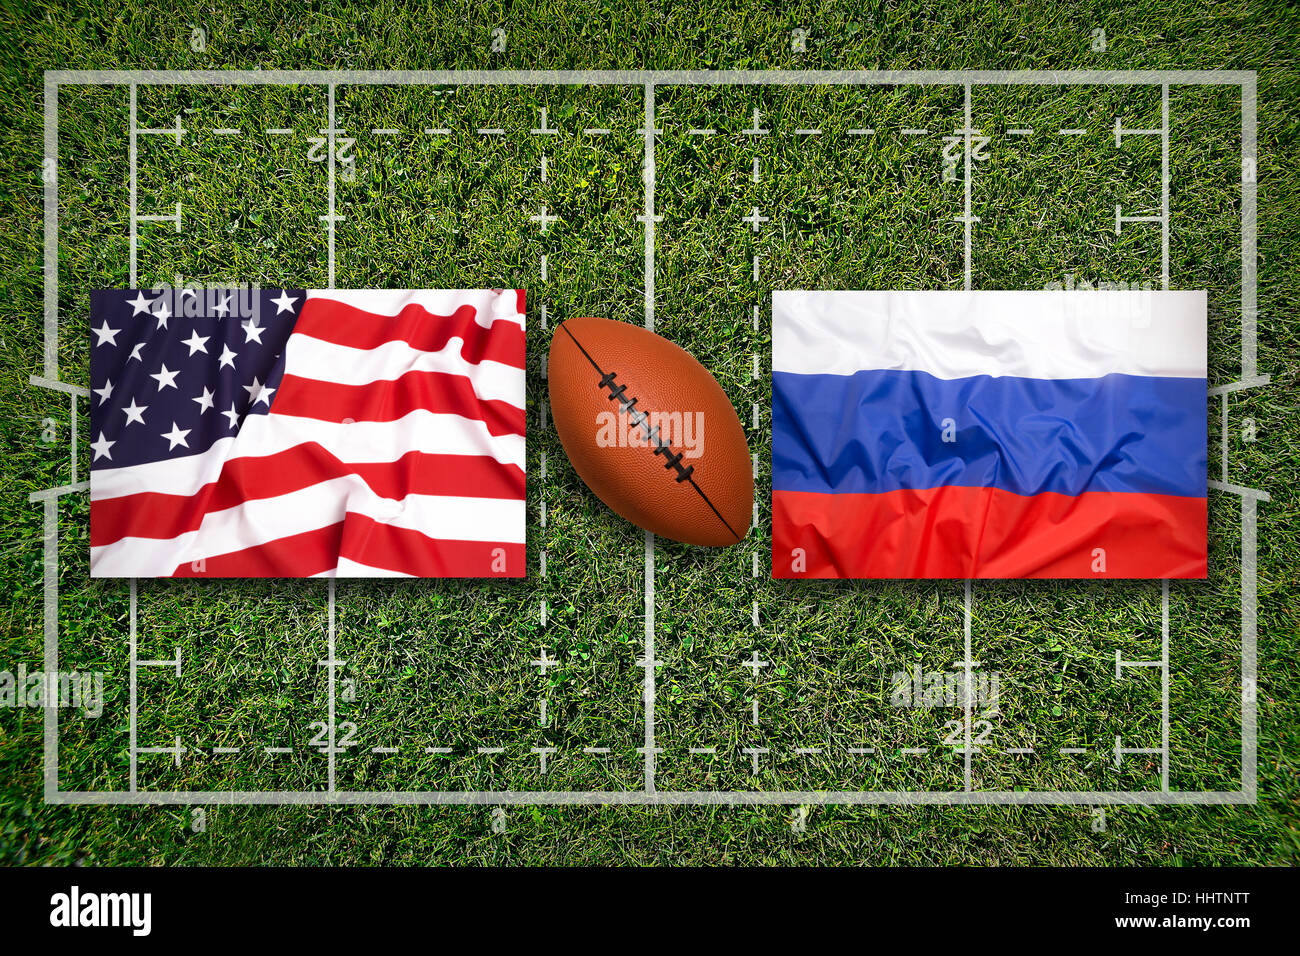 USA vs. Russland Flaggen auf grüne Rugby-Feld Stockfoto